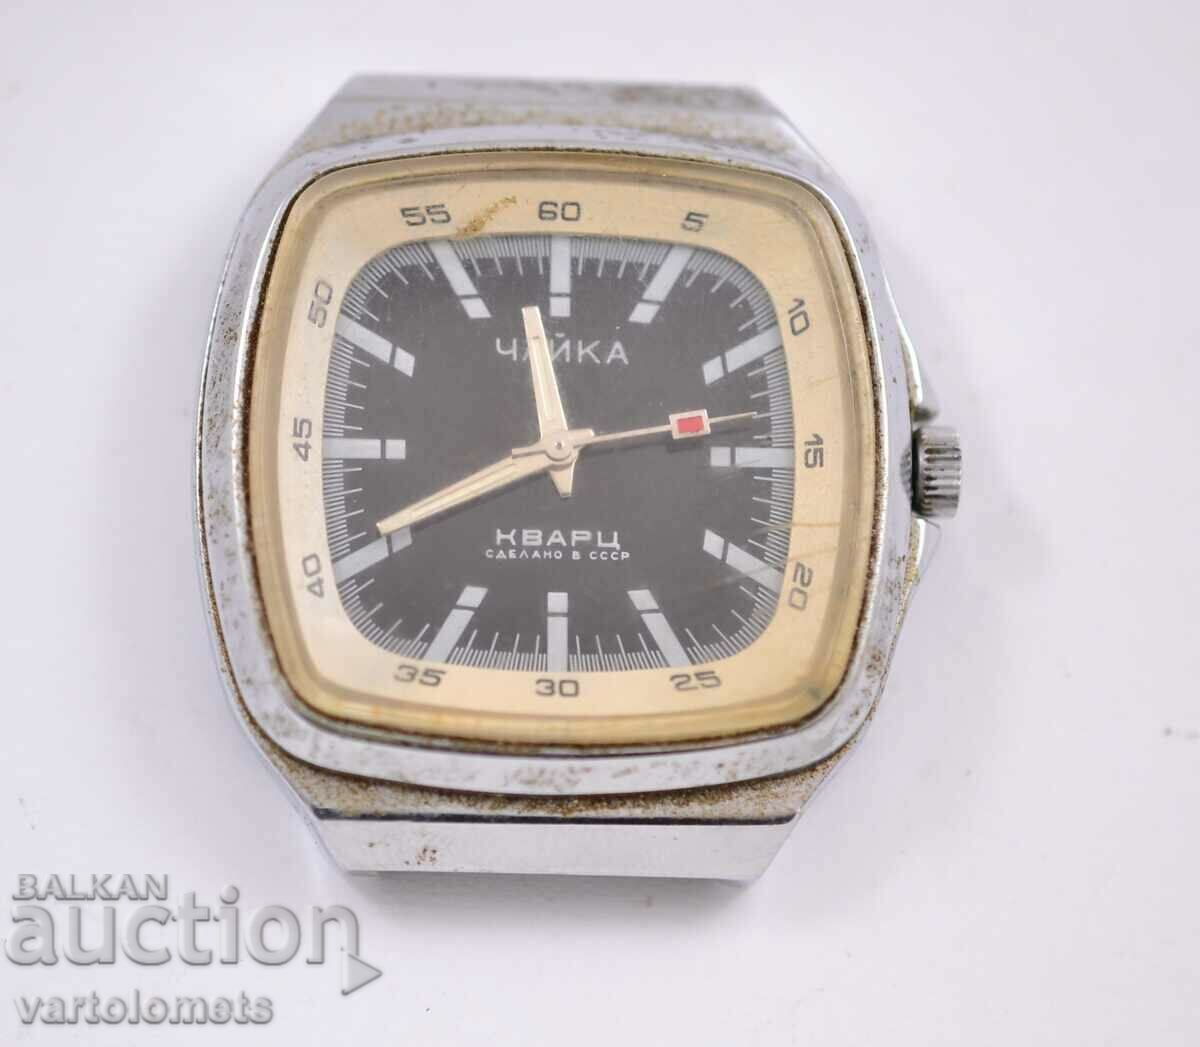 Chaika quartz USSR watch - untested